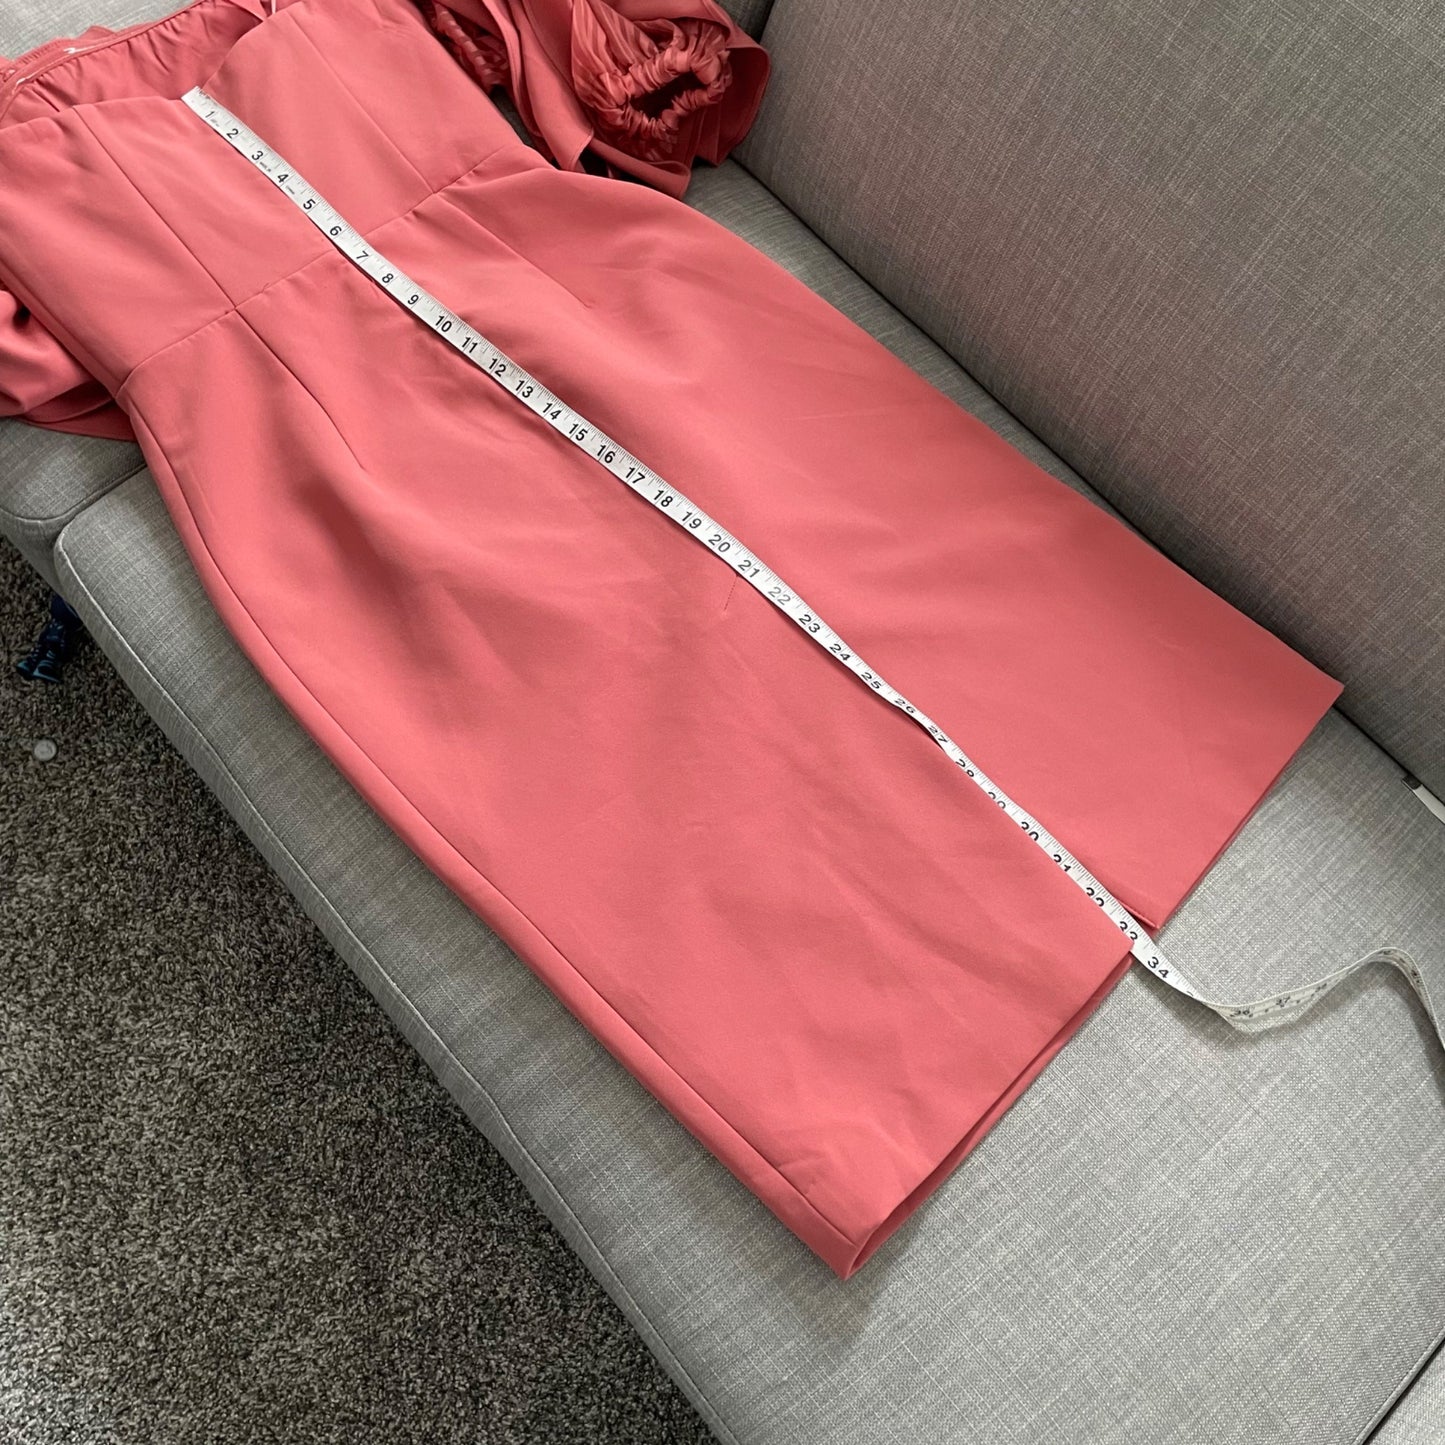 La Maison Talulah Pink Off the Shoulder Ruffle Sleeve Dress Women's Size Medium